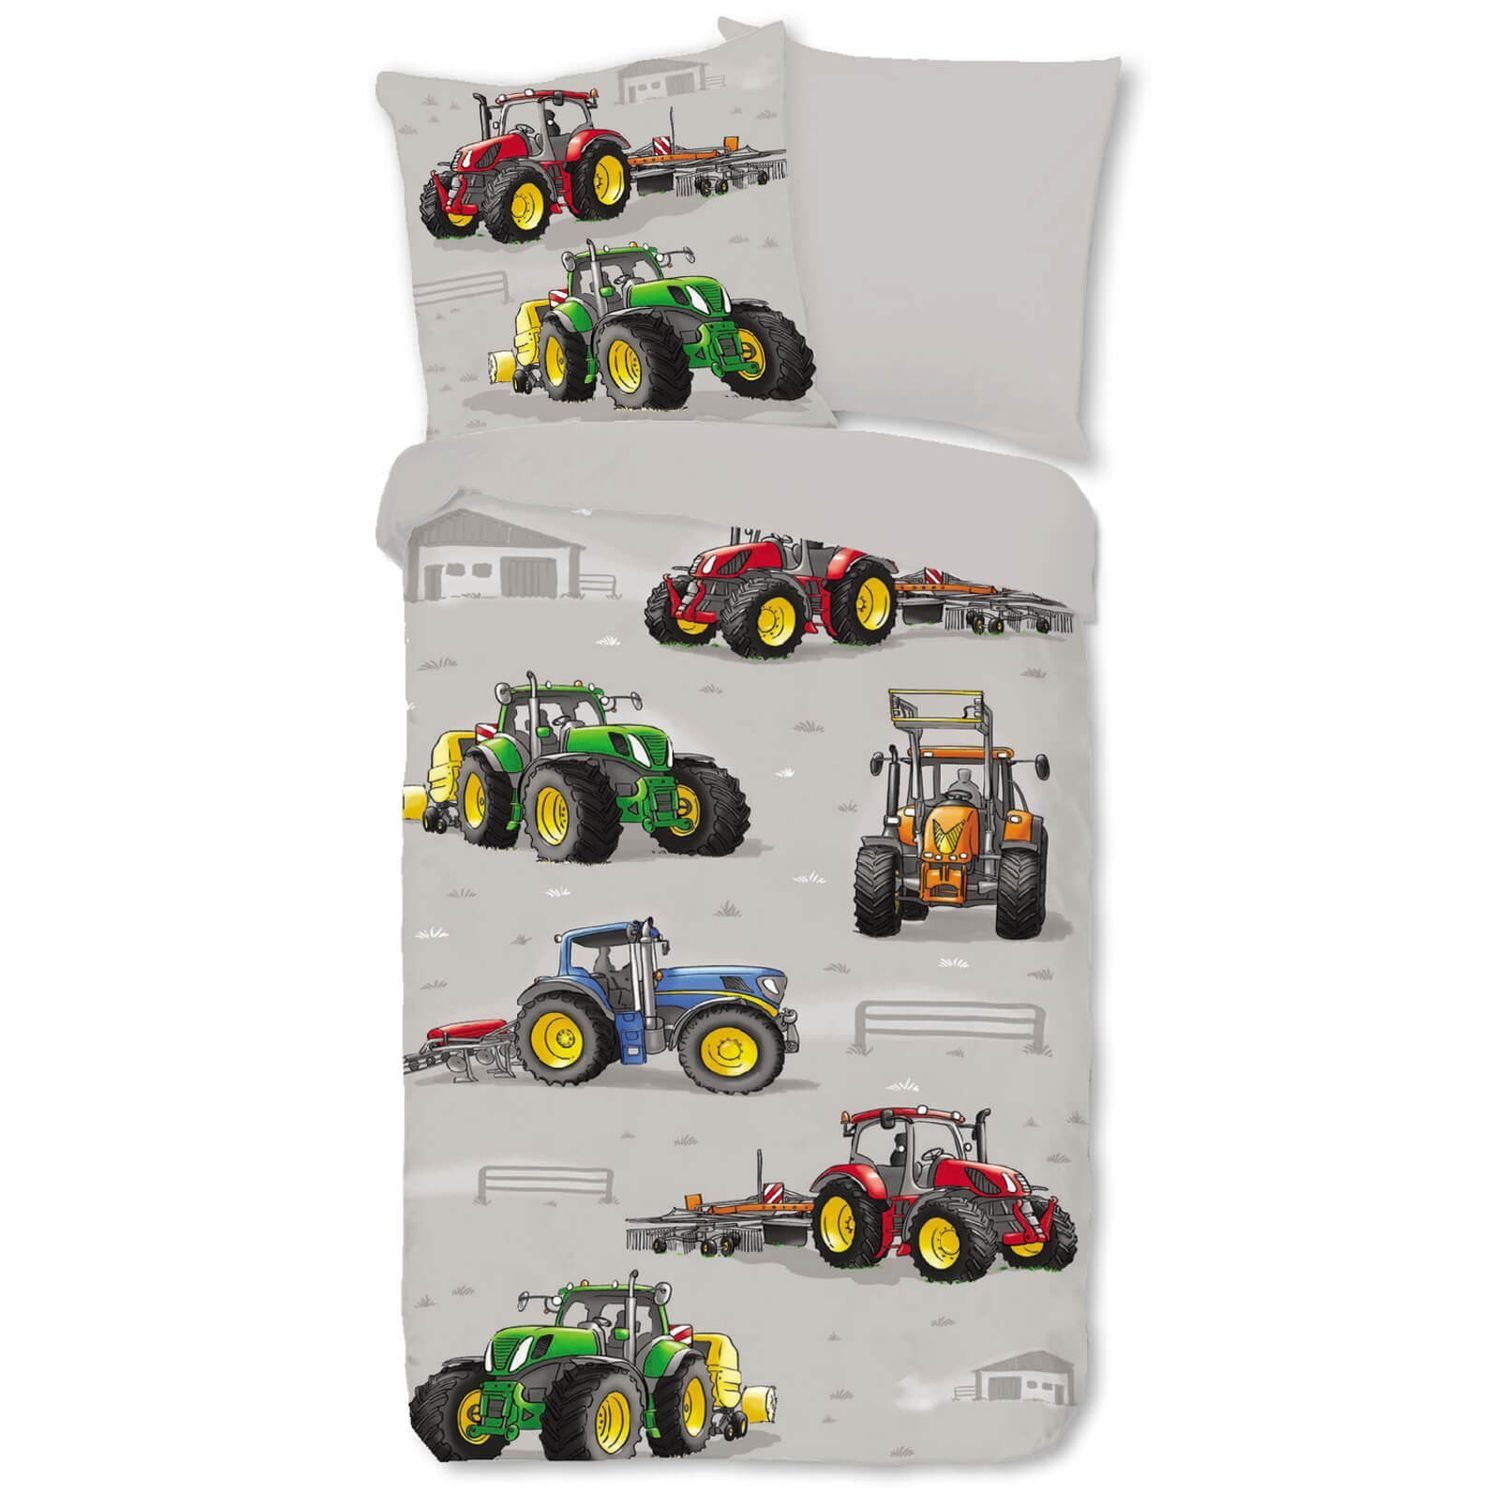 Kinderbettwäsche Traktor Grau, ESPiCO, Renforcé, 2 teilig, Trecker